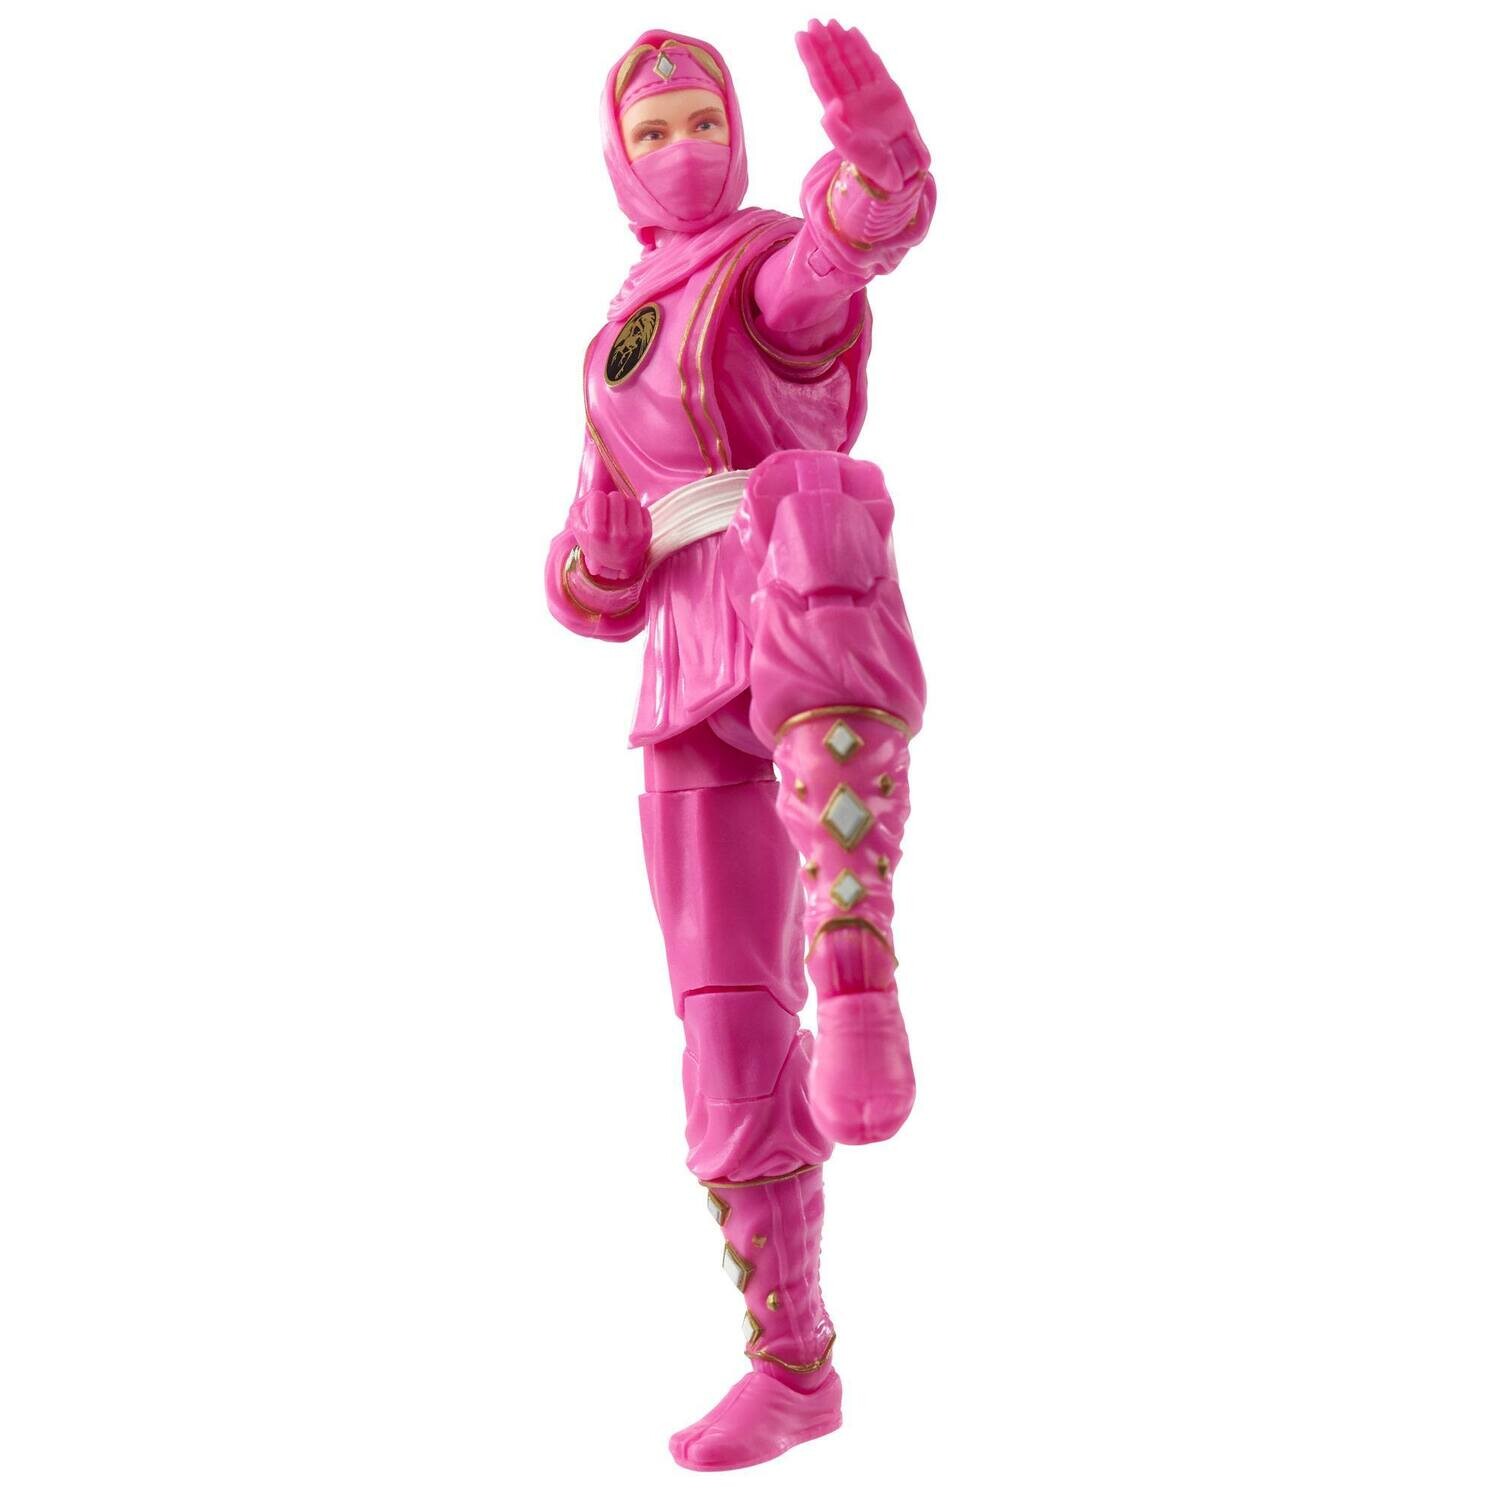 Pre-order: Mighty Morphin Power Rangers Lightning Collection Actionfigur Ninja Pink Ranger 15 cm